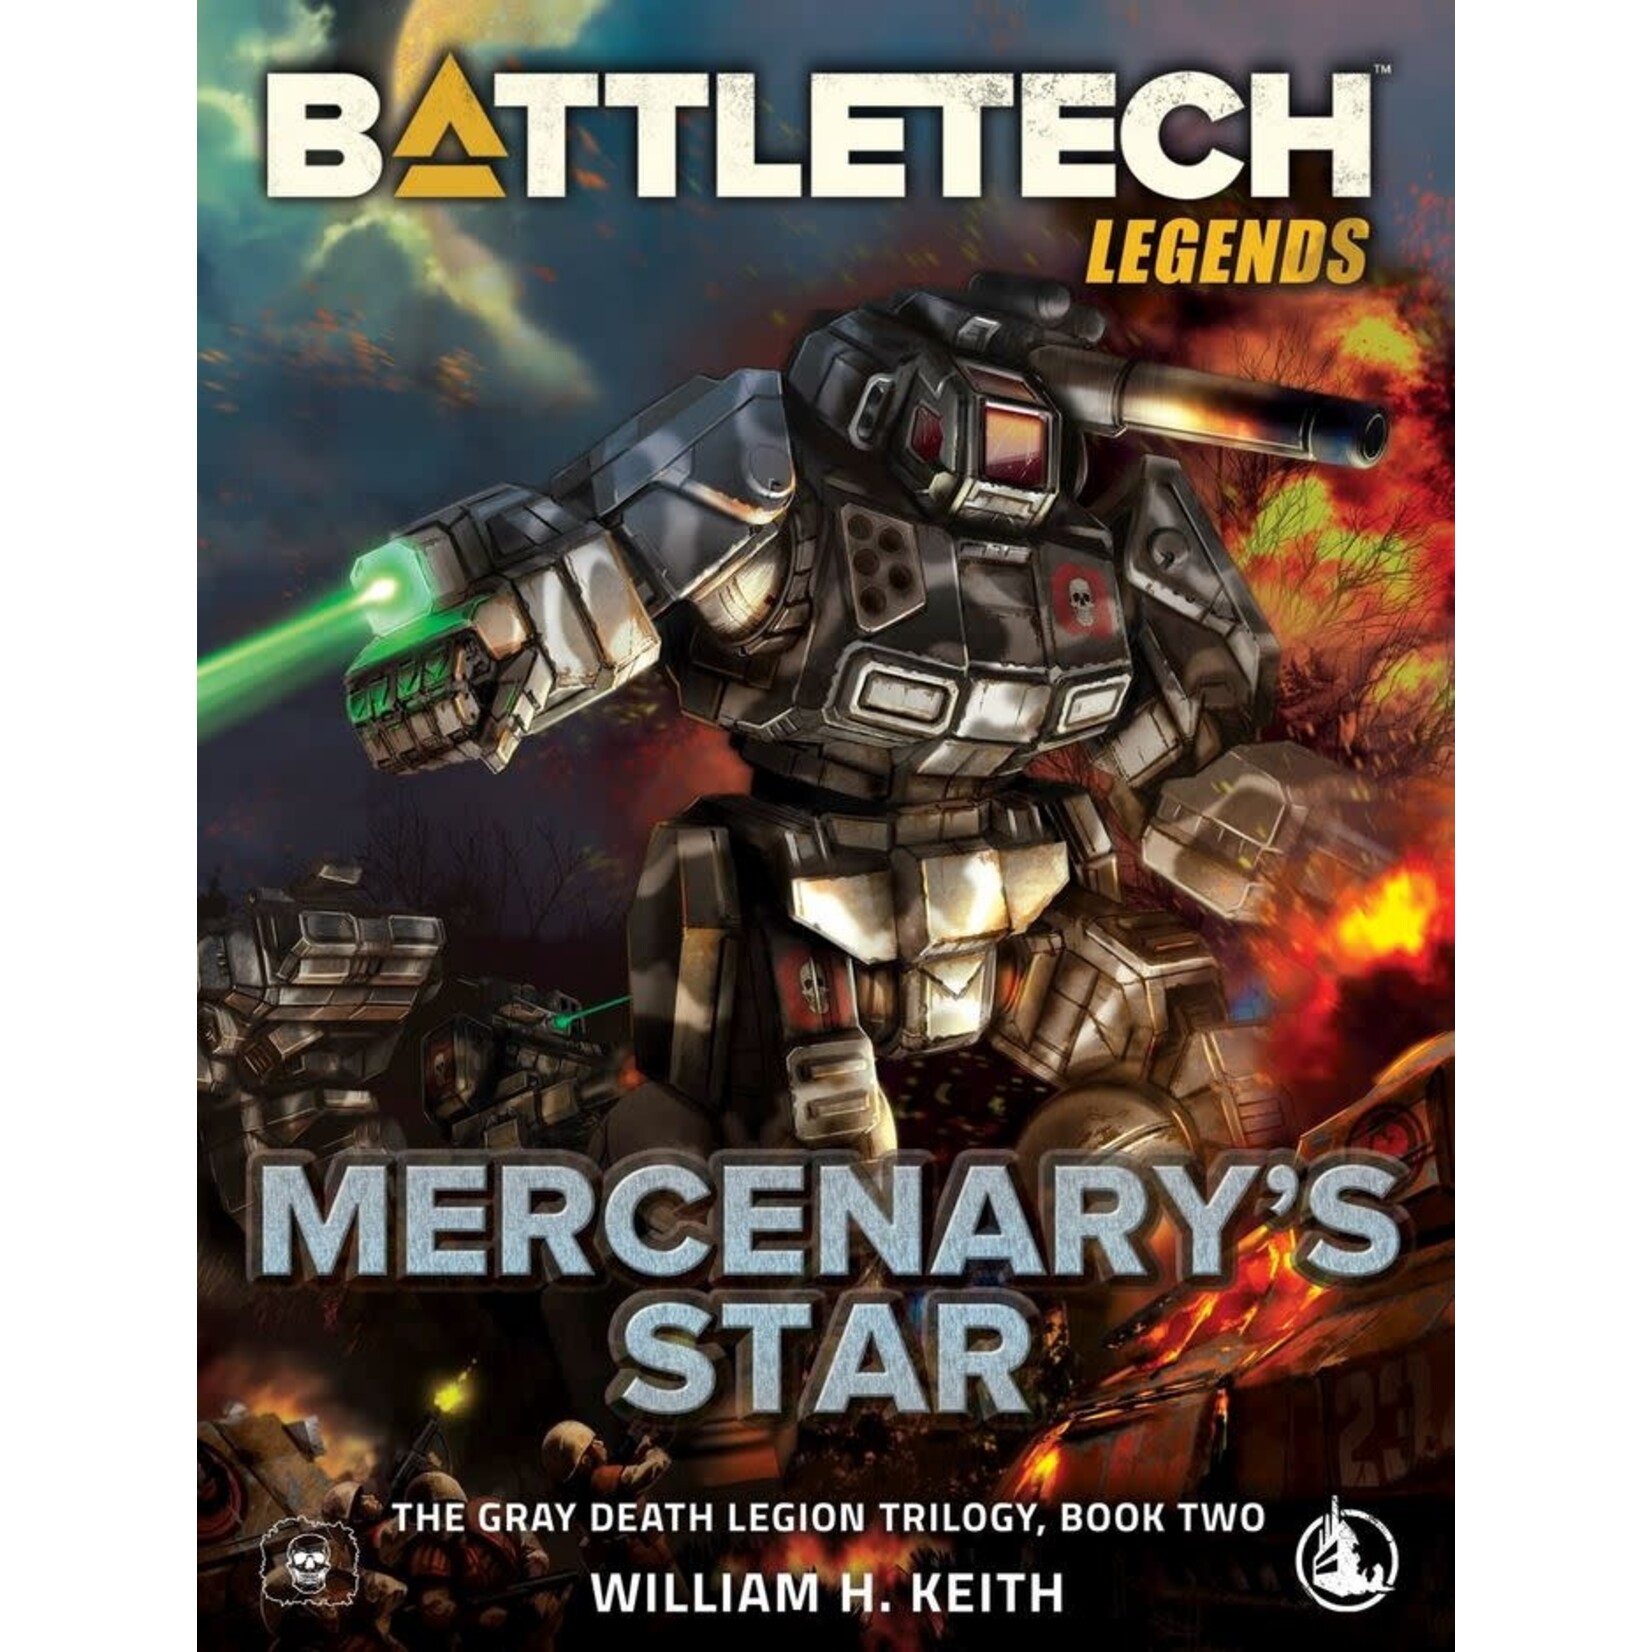 BattleTech: Mercenary's Star Hardcover (Preorder)